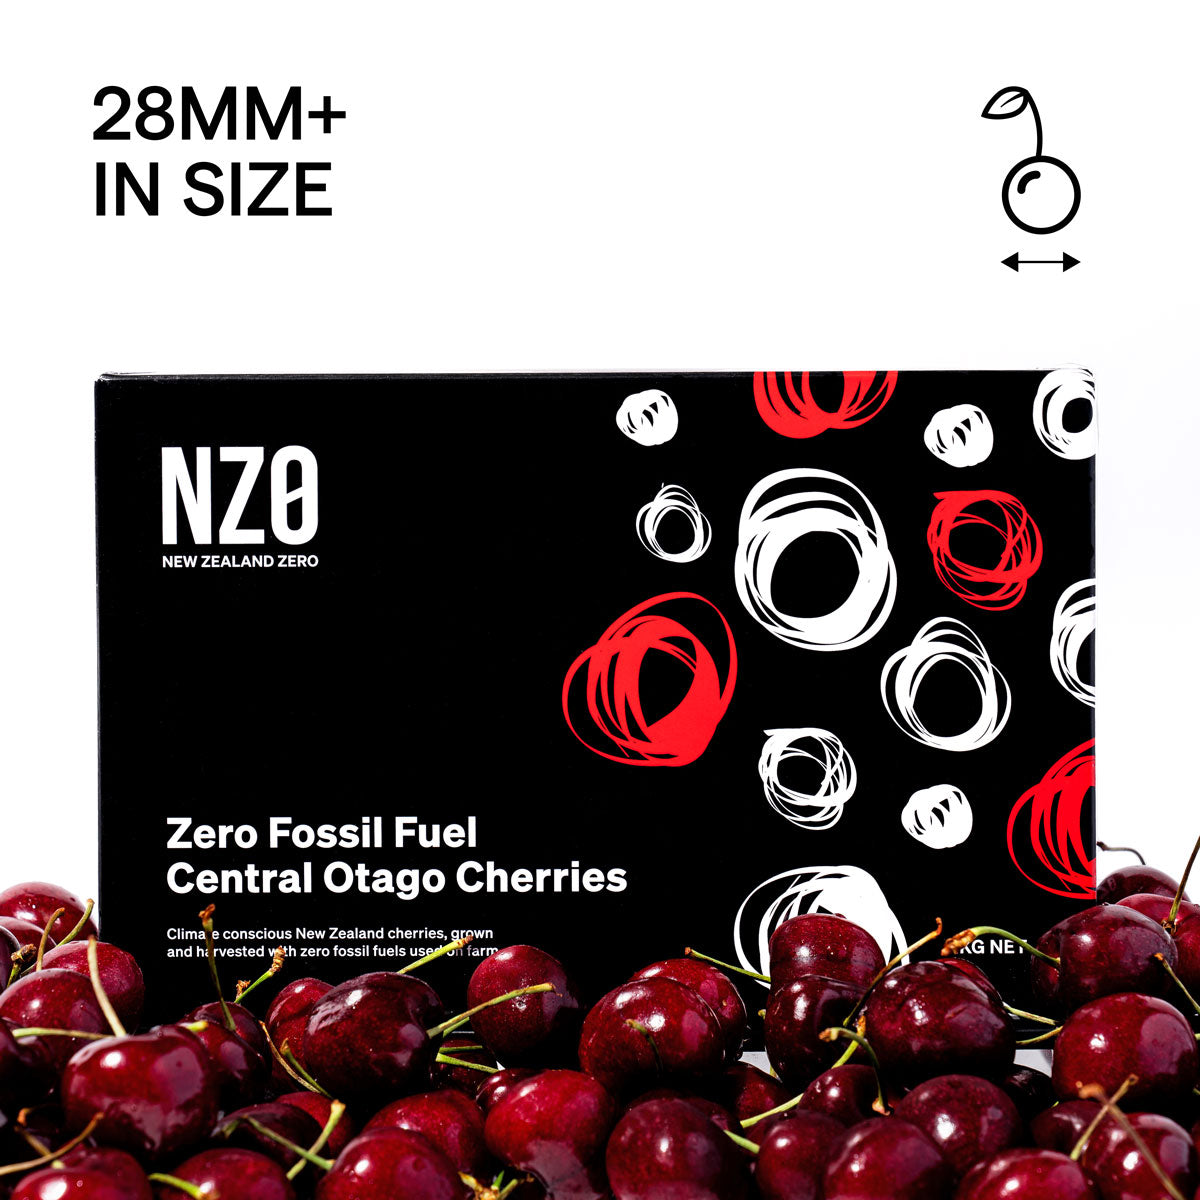 2KG Central Otago Cherries. 28MM+ or larger.